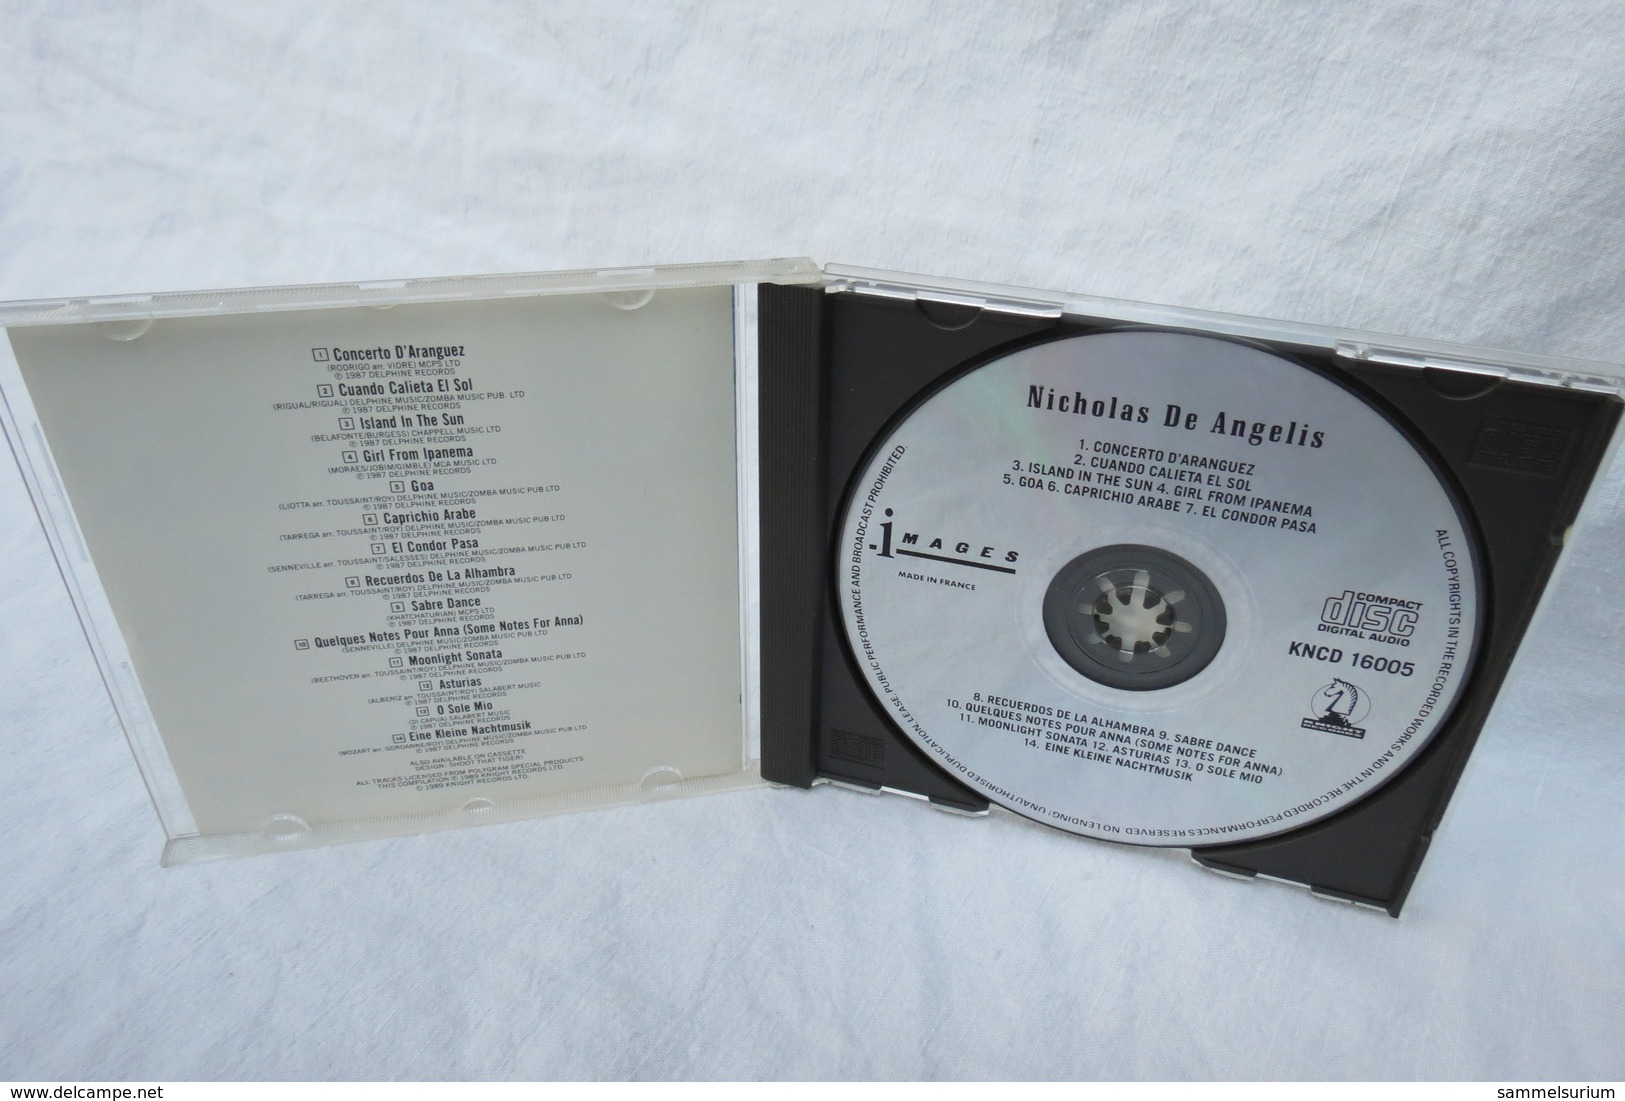 CD "Nicholas De Angelis" Images - Instrumentaal